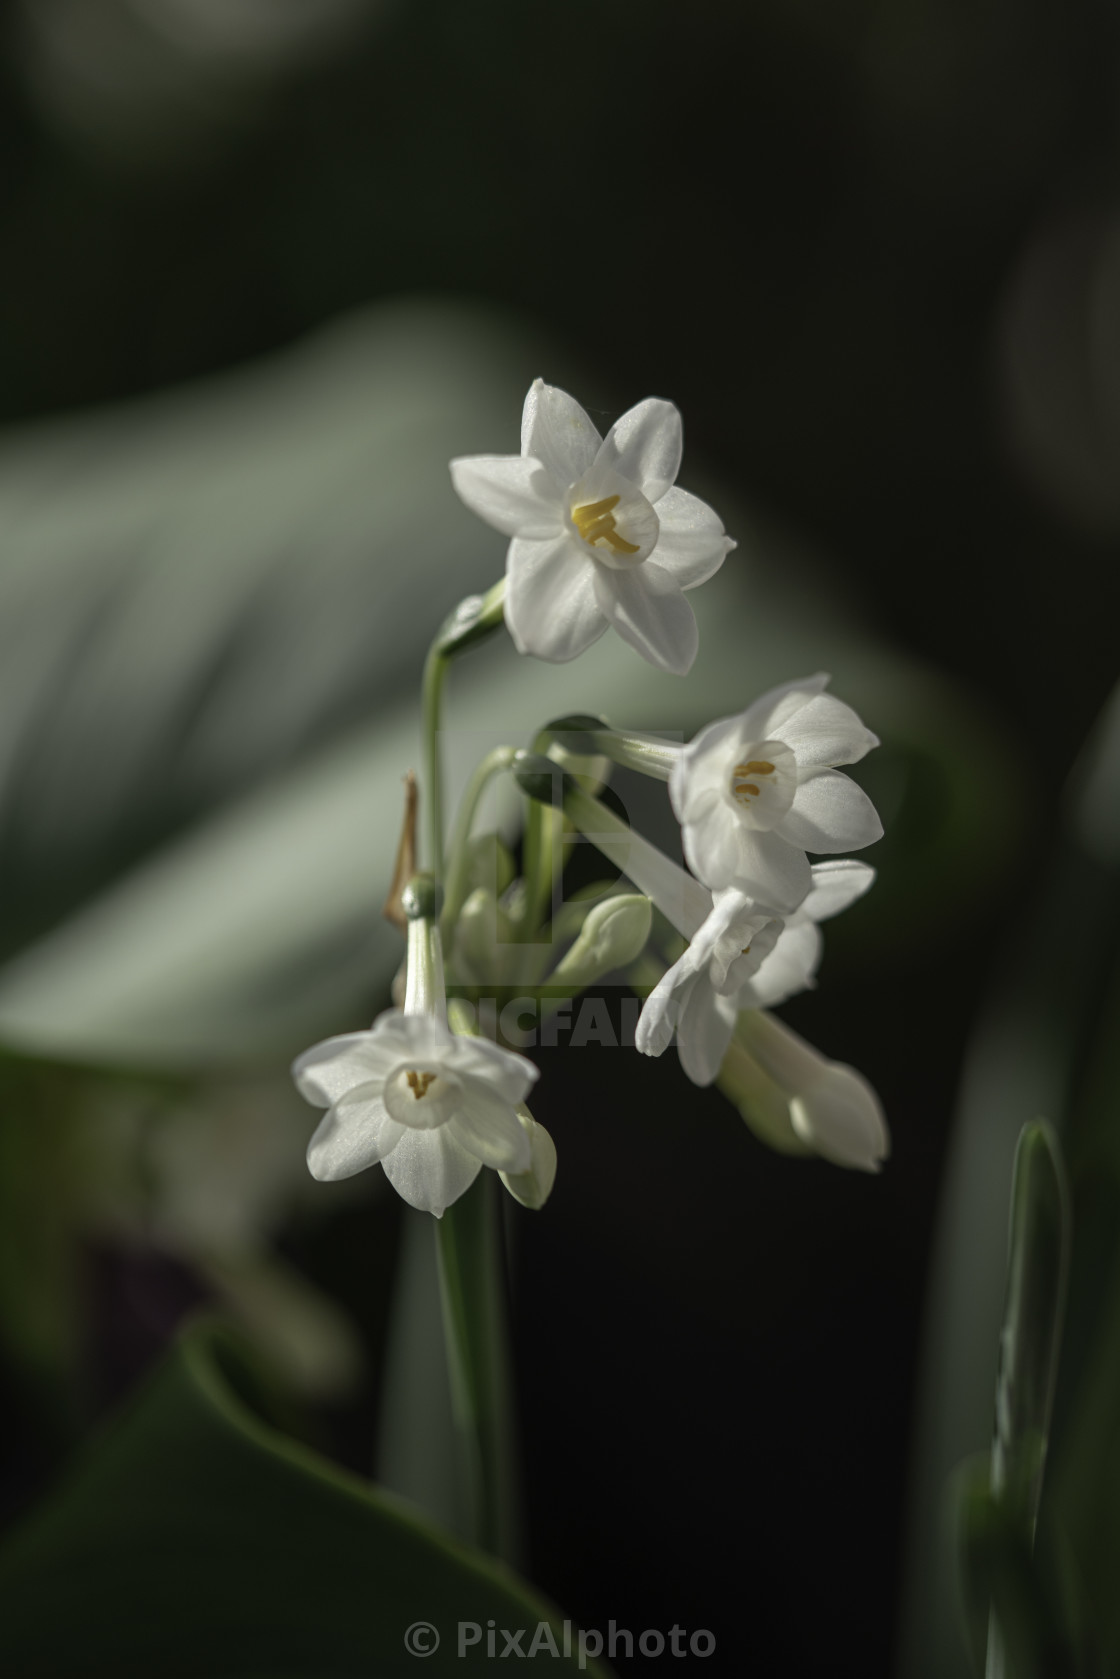 "Wild Narcissus" stock image